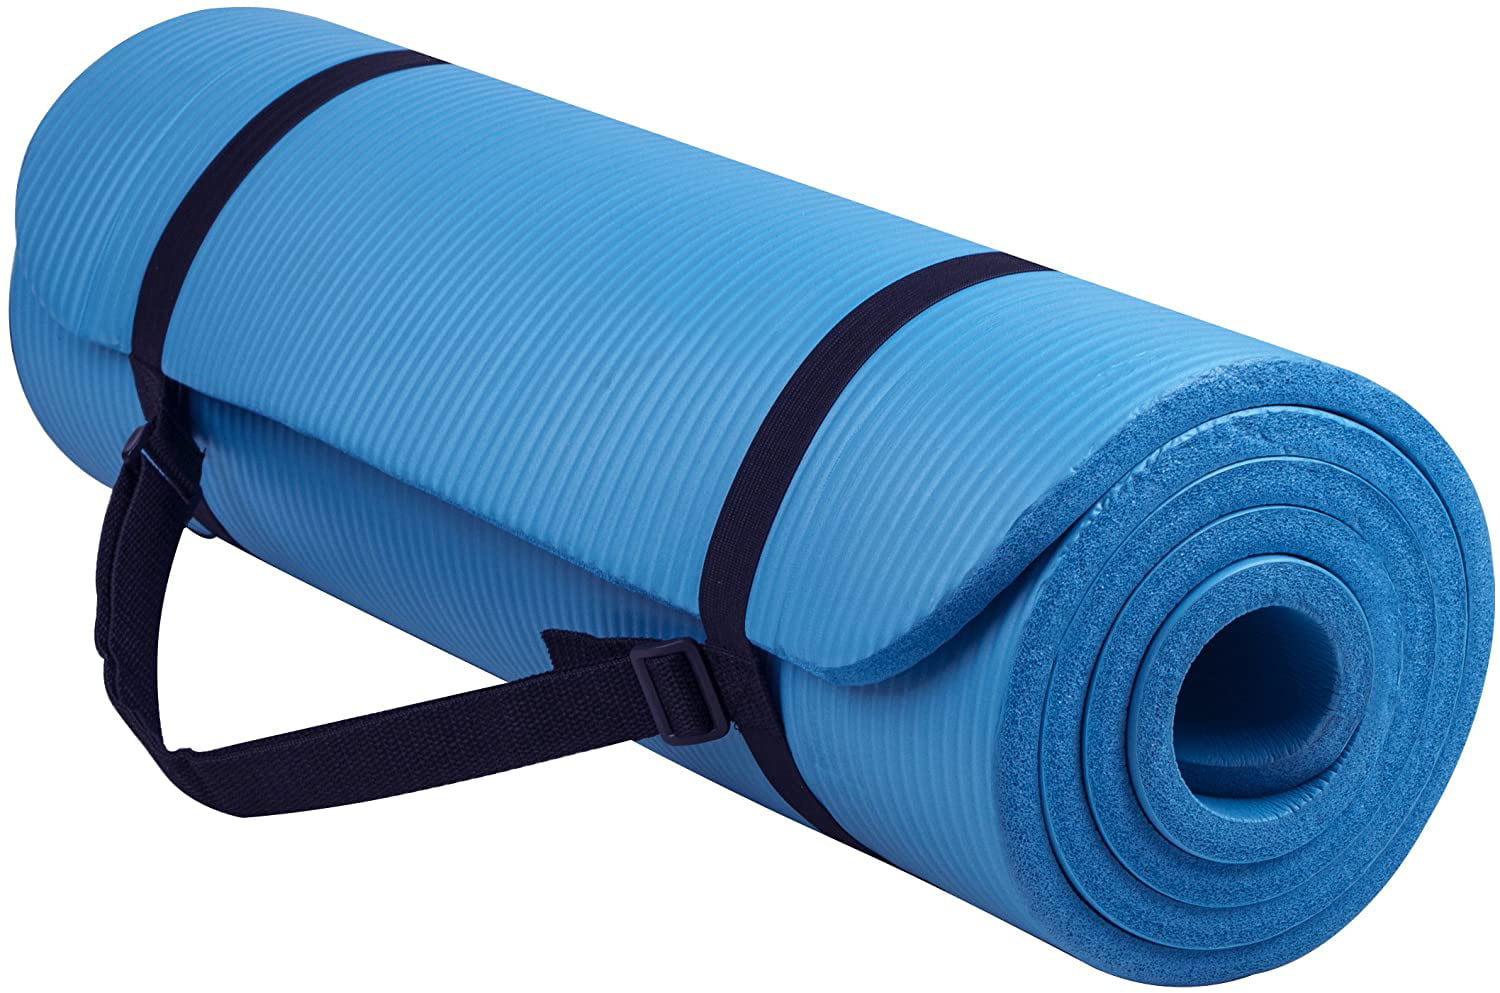 Yoga Mat,Exercise Fitness Mat High Density Non-Slip TPE Workout Mat for Yoga, Pilates & Exercises, Anti - Tear, Sweat - Proof, 1/2 Inch Thick Yoga Mats - Walmart.com